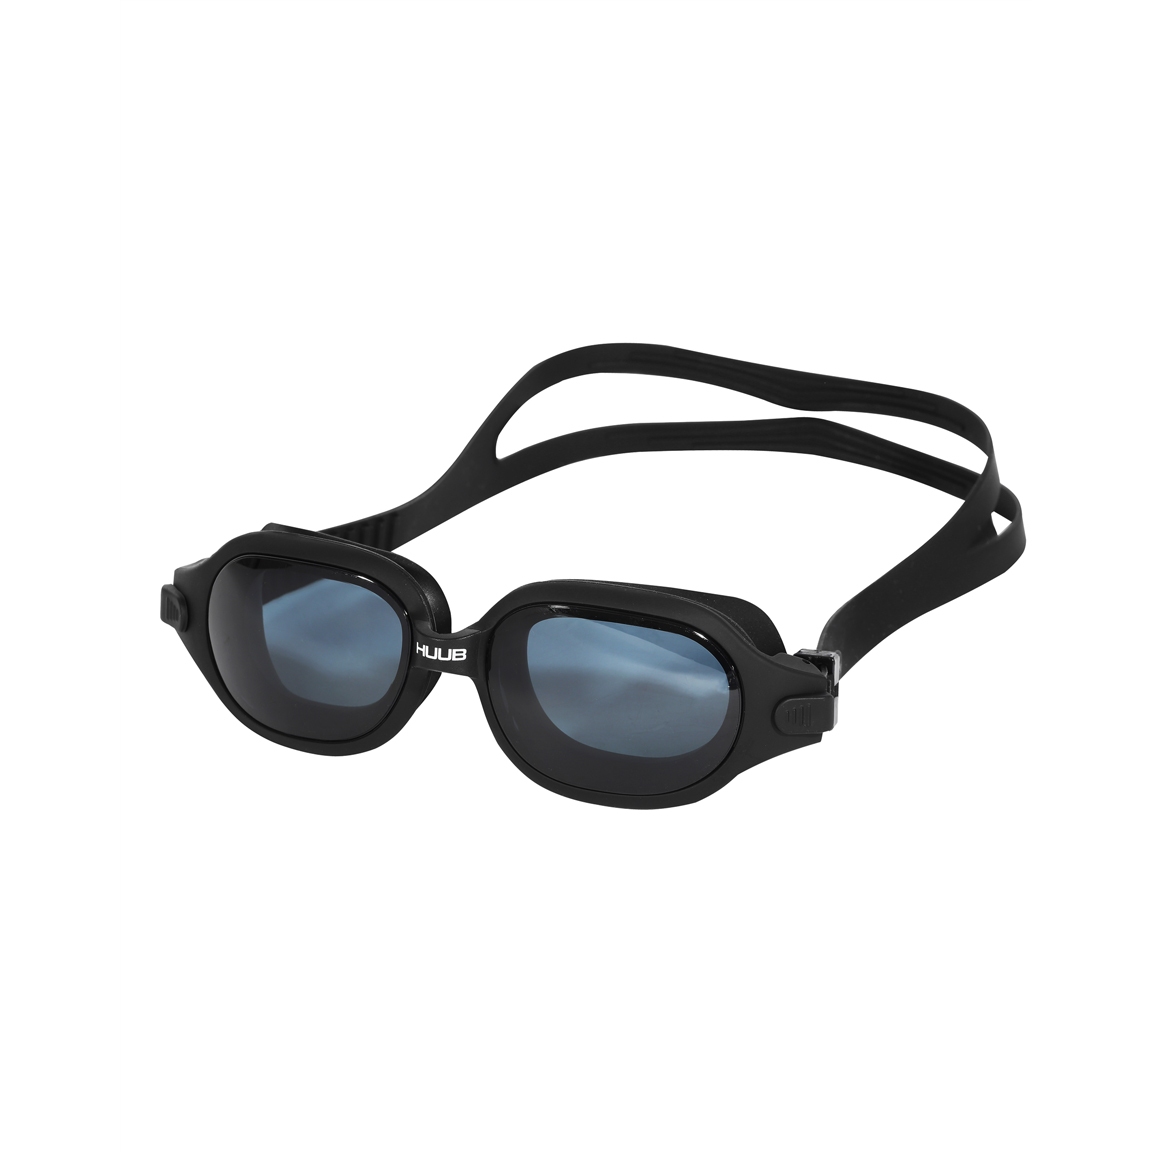 Productfoto van HUUB Design Retro Zwembril - zwart